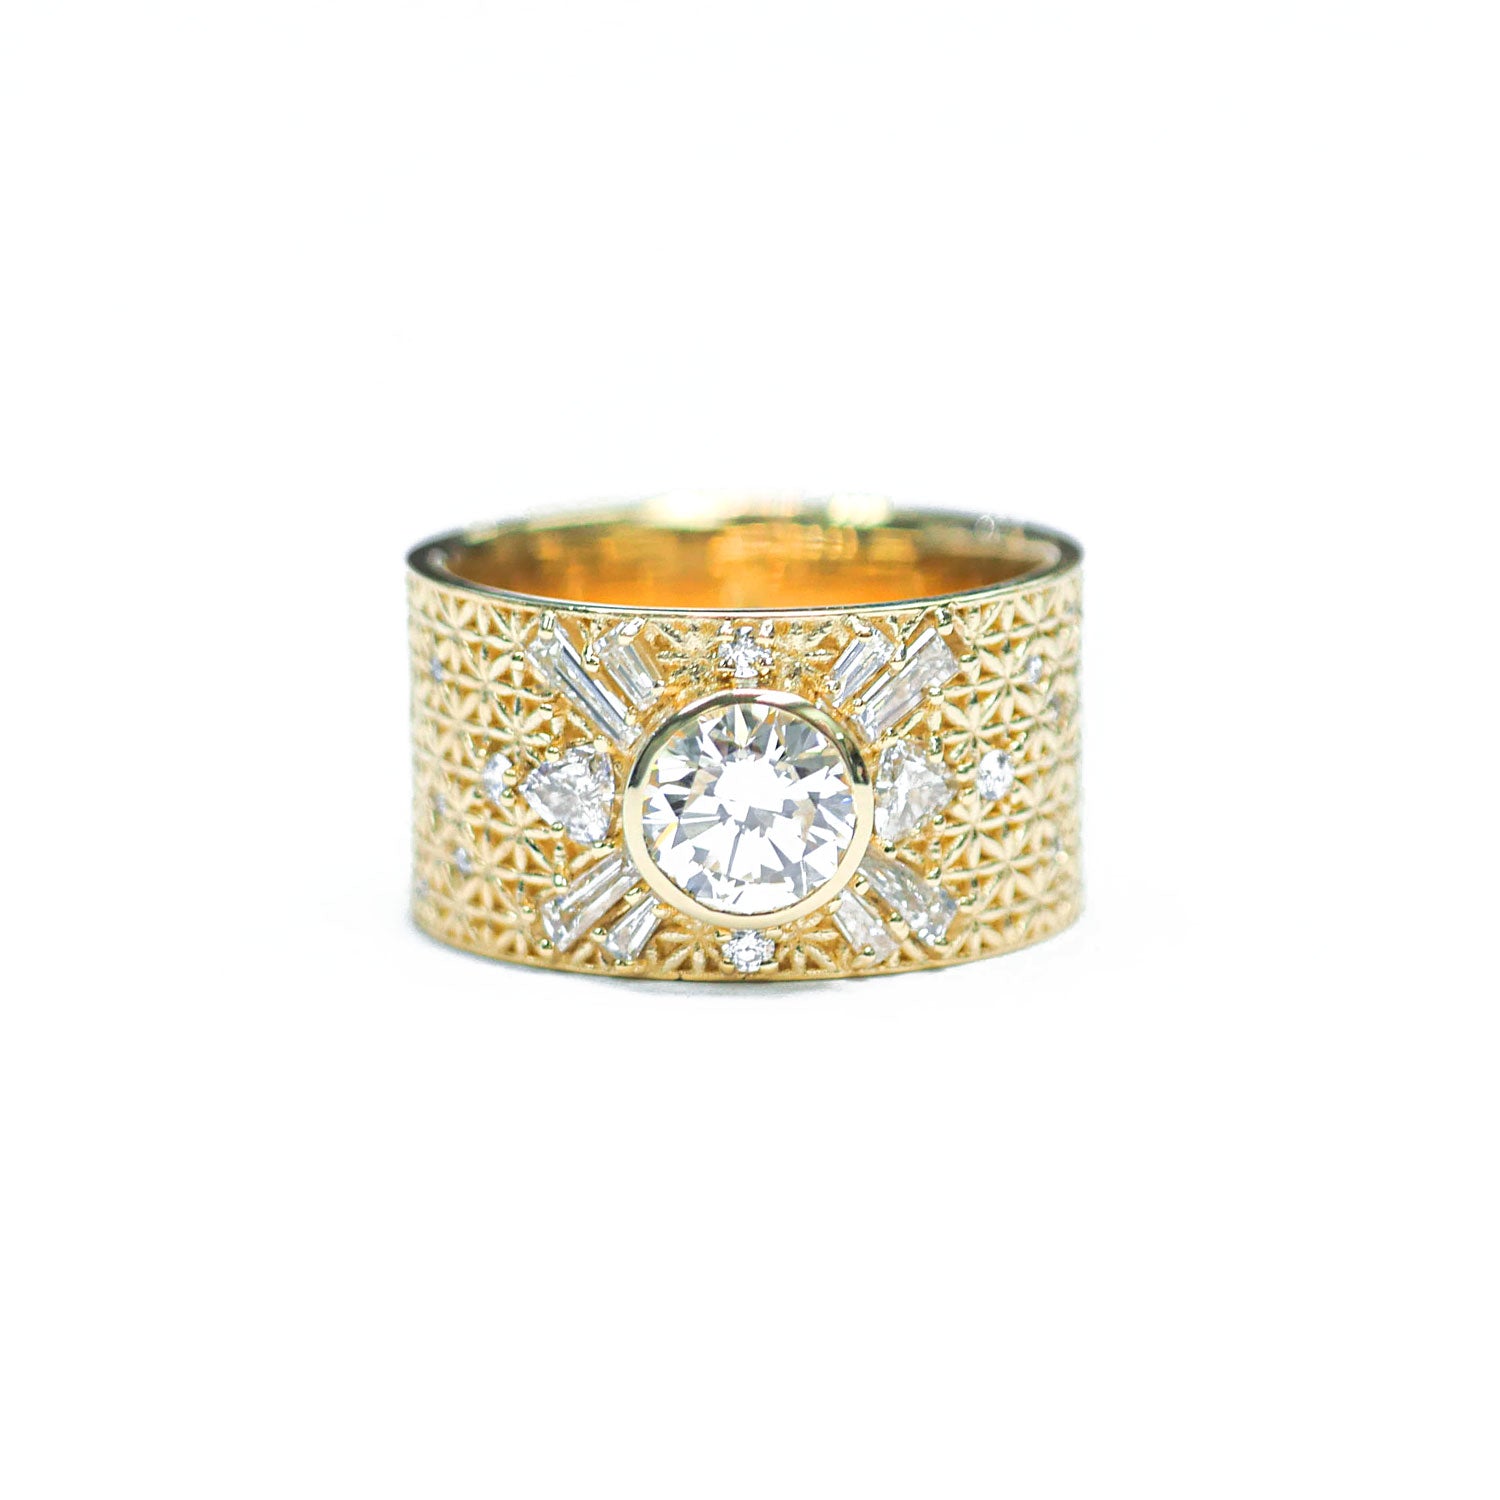 Heirloom Diamond Wide Antique Star Sunburst Ring